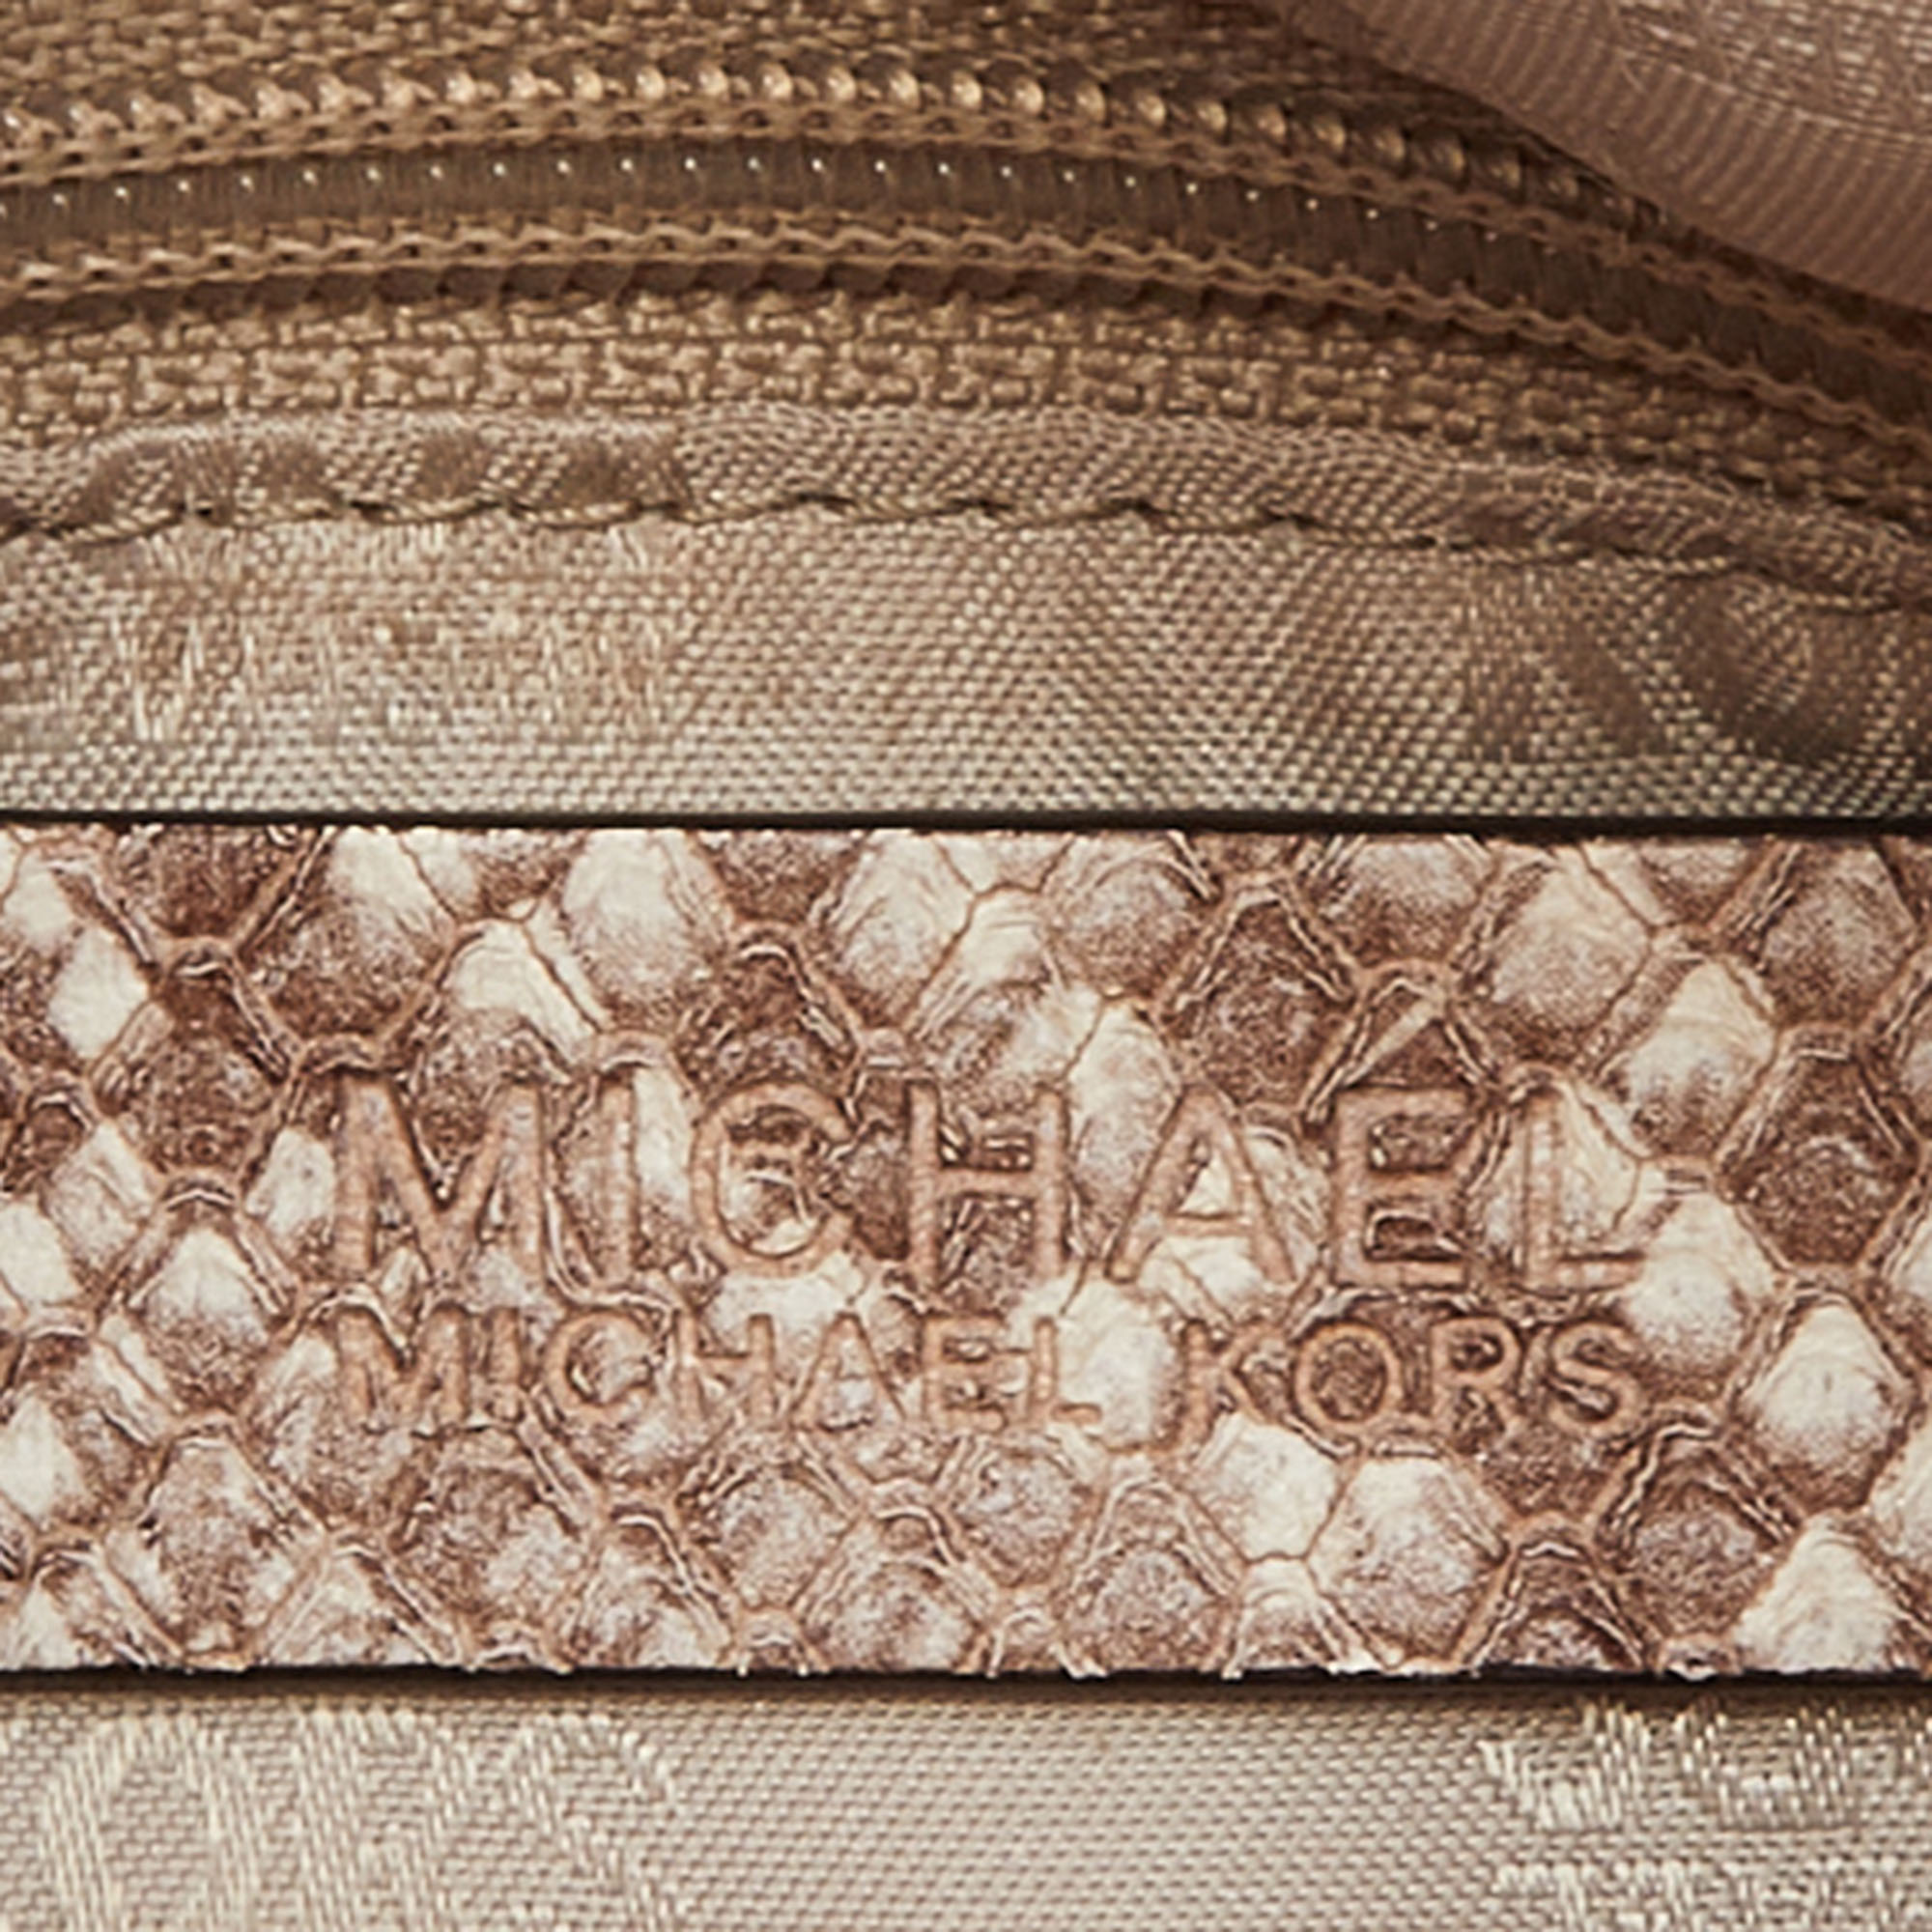 MICHAEL Michael Kors Beige Python Embossed Leather Bedford Crossbody Bag